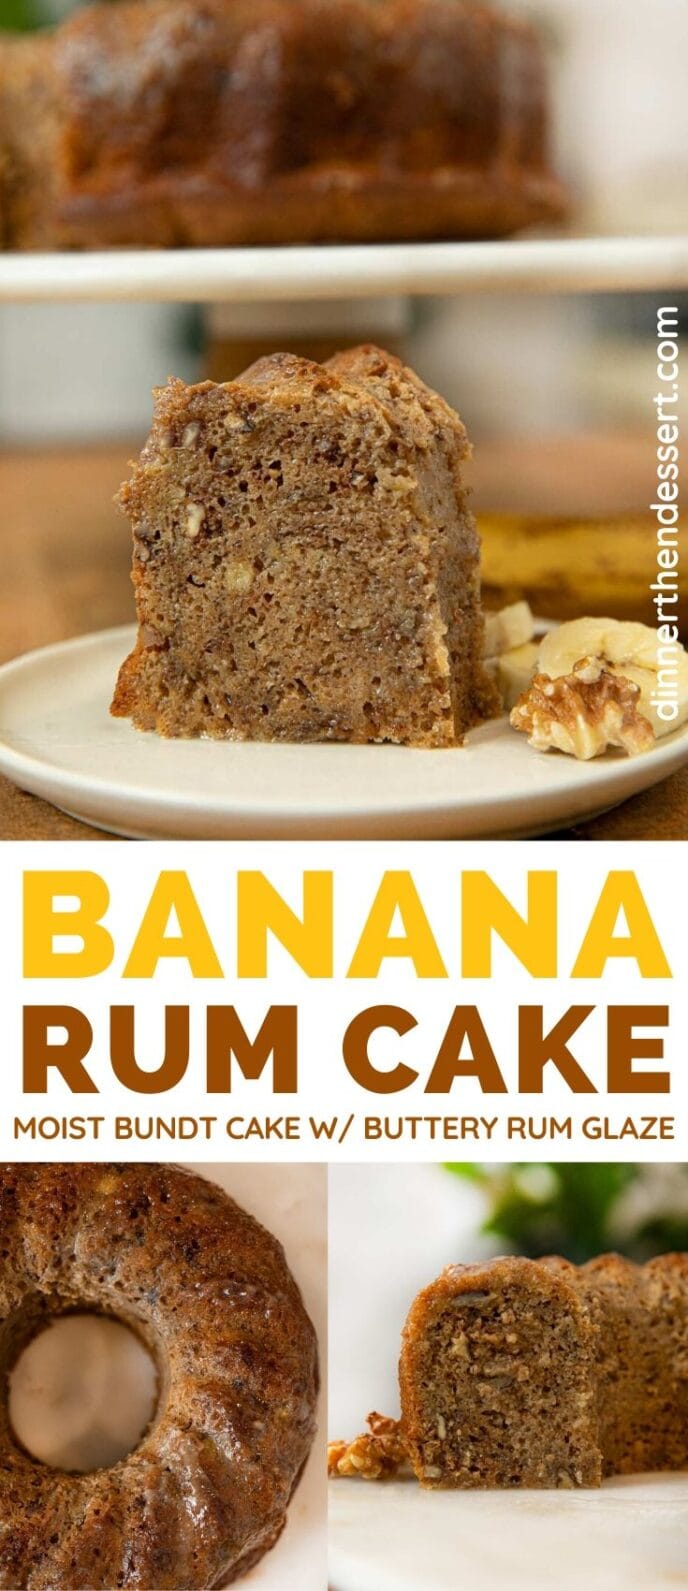 Banana Rum Cake collage